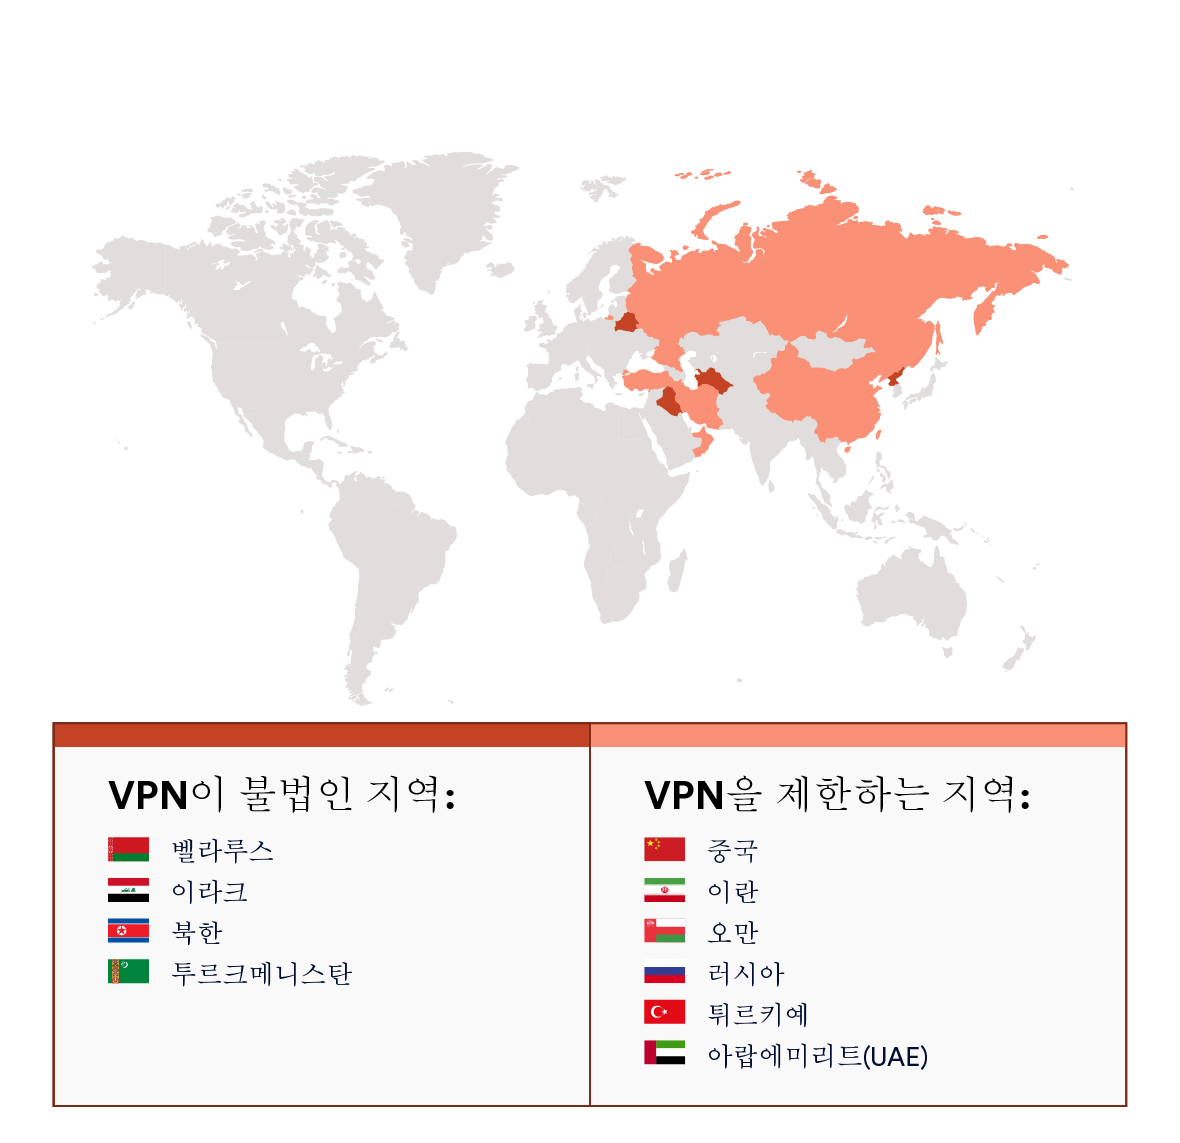 VPN 사용이 제한되거나 불법인 국가